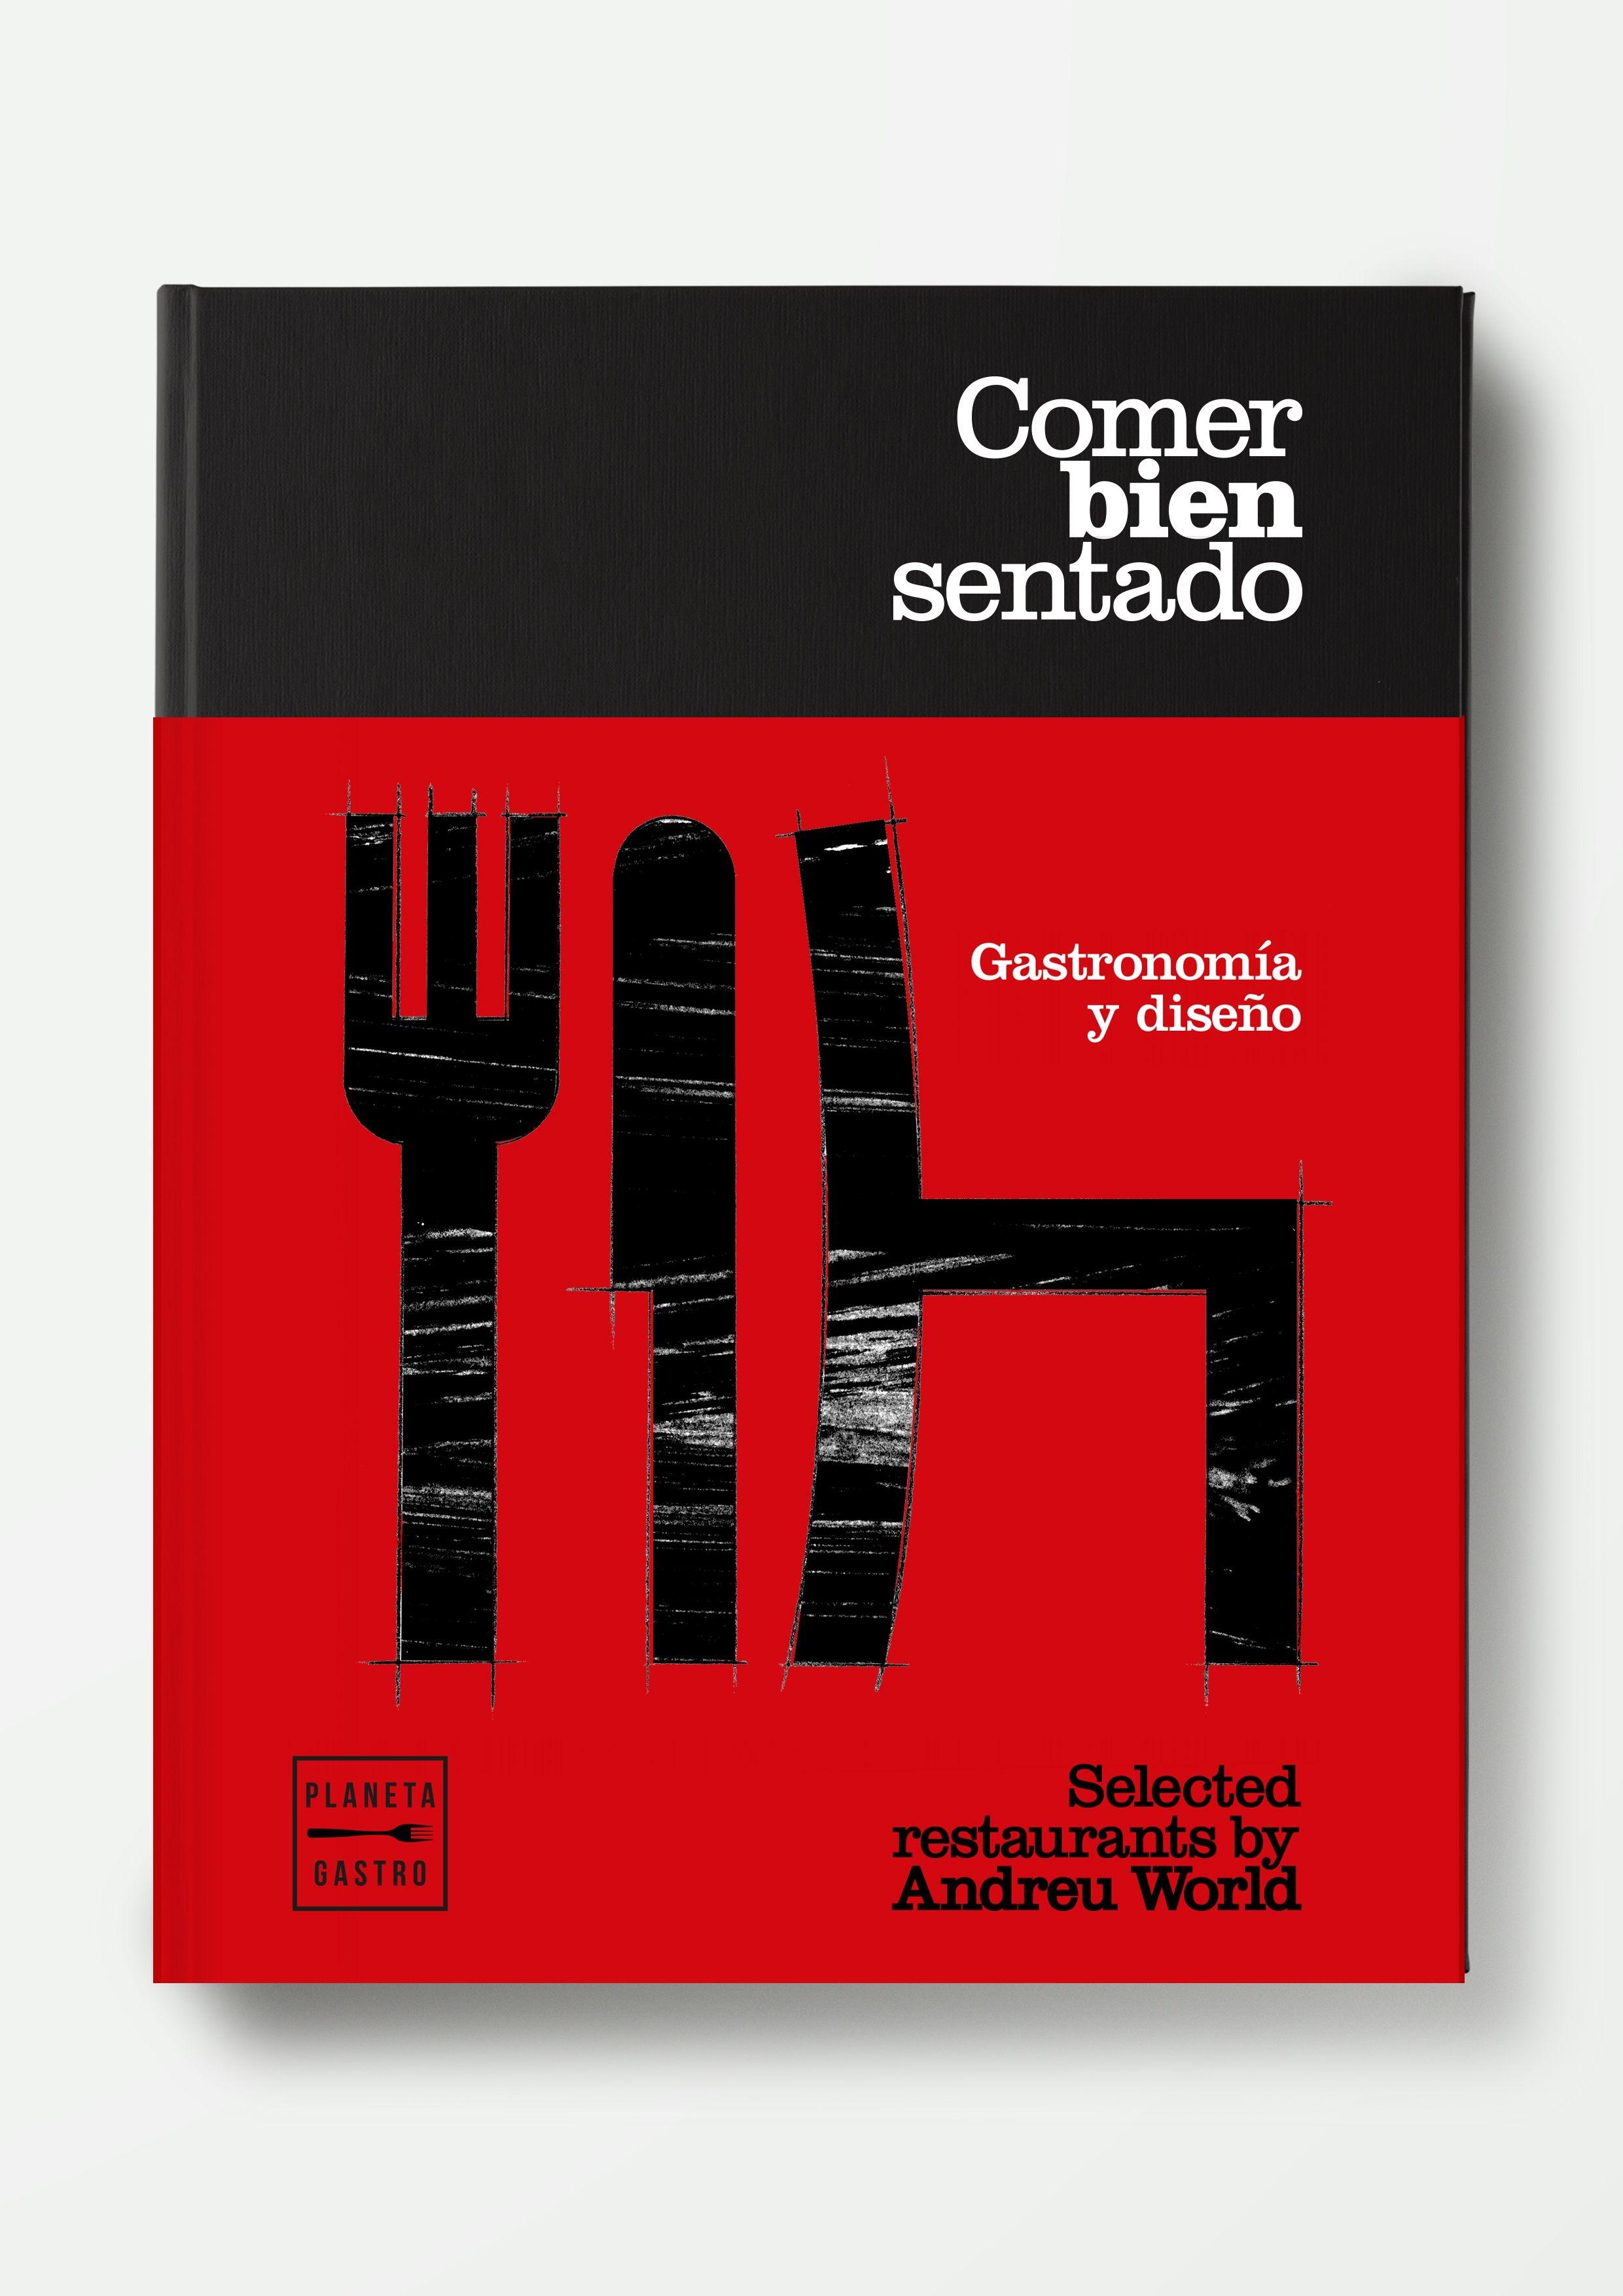 Comer bien sentado "Selected restaurants by Andreu World". 